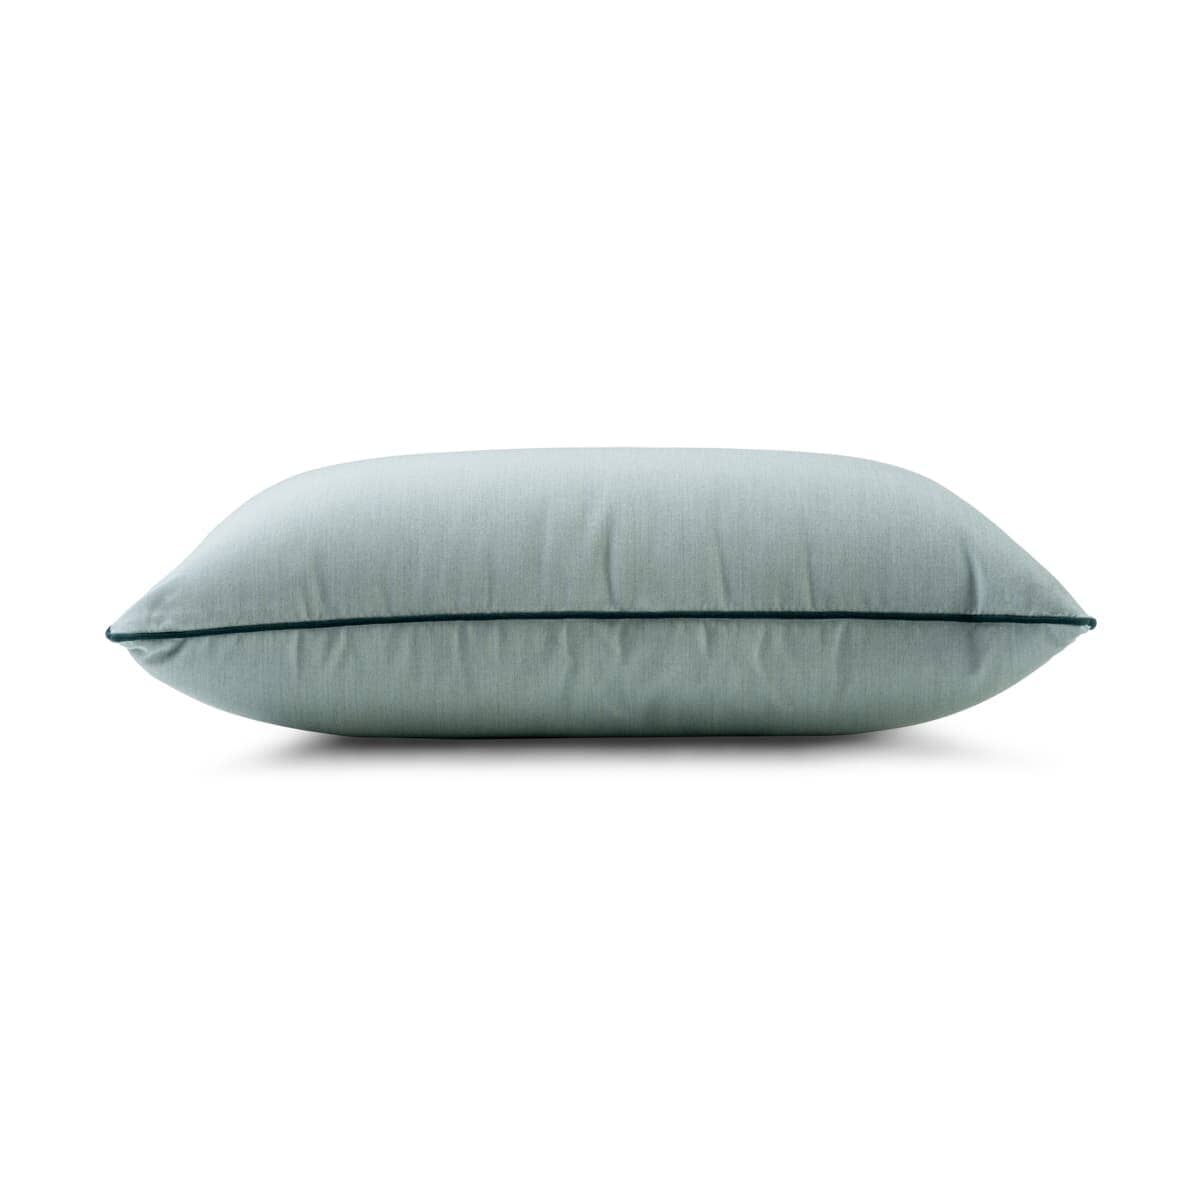 Studio image of riviera green rectangle throw pillow